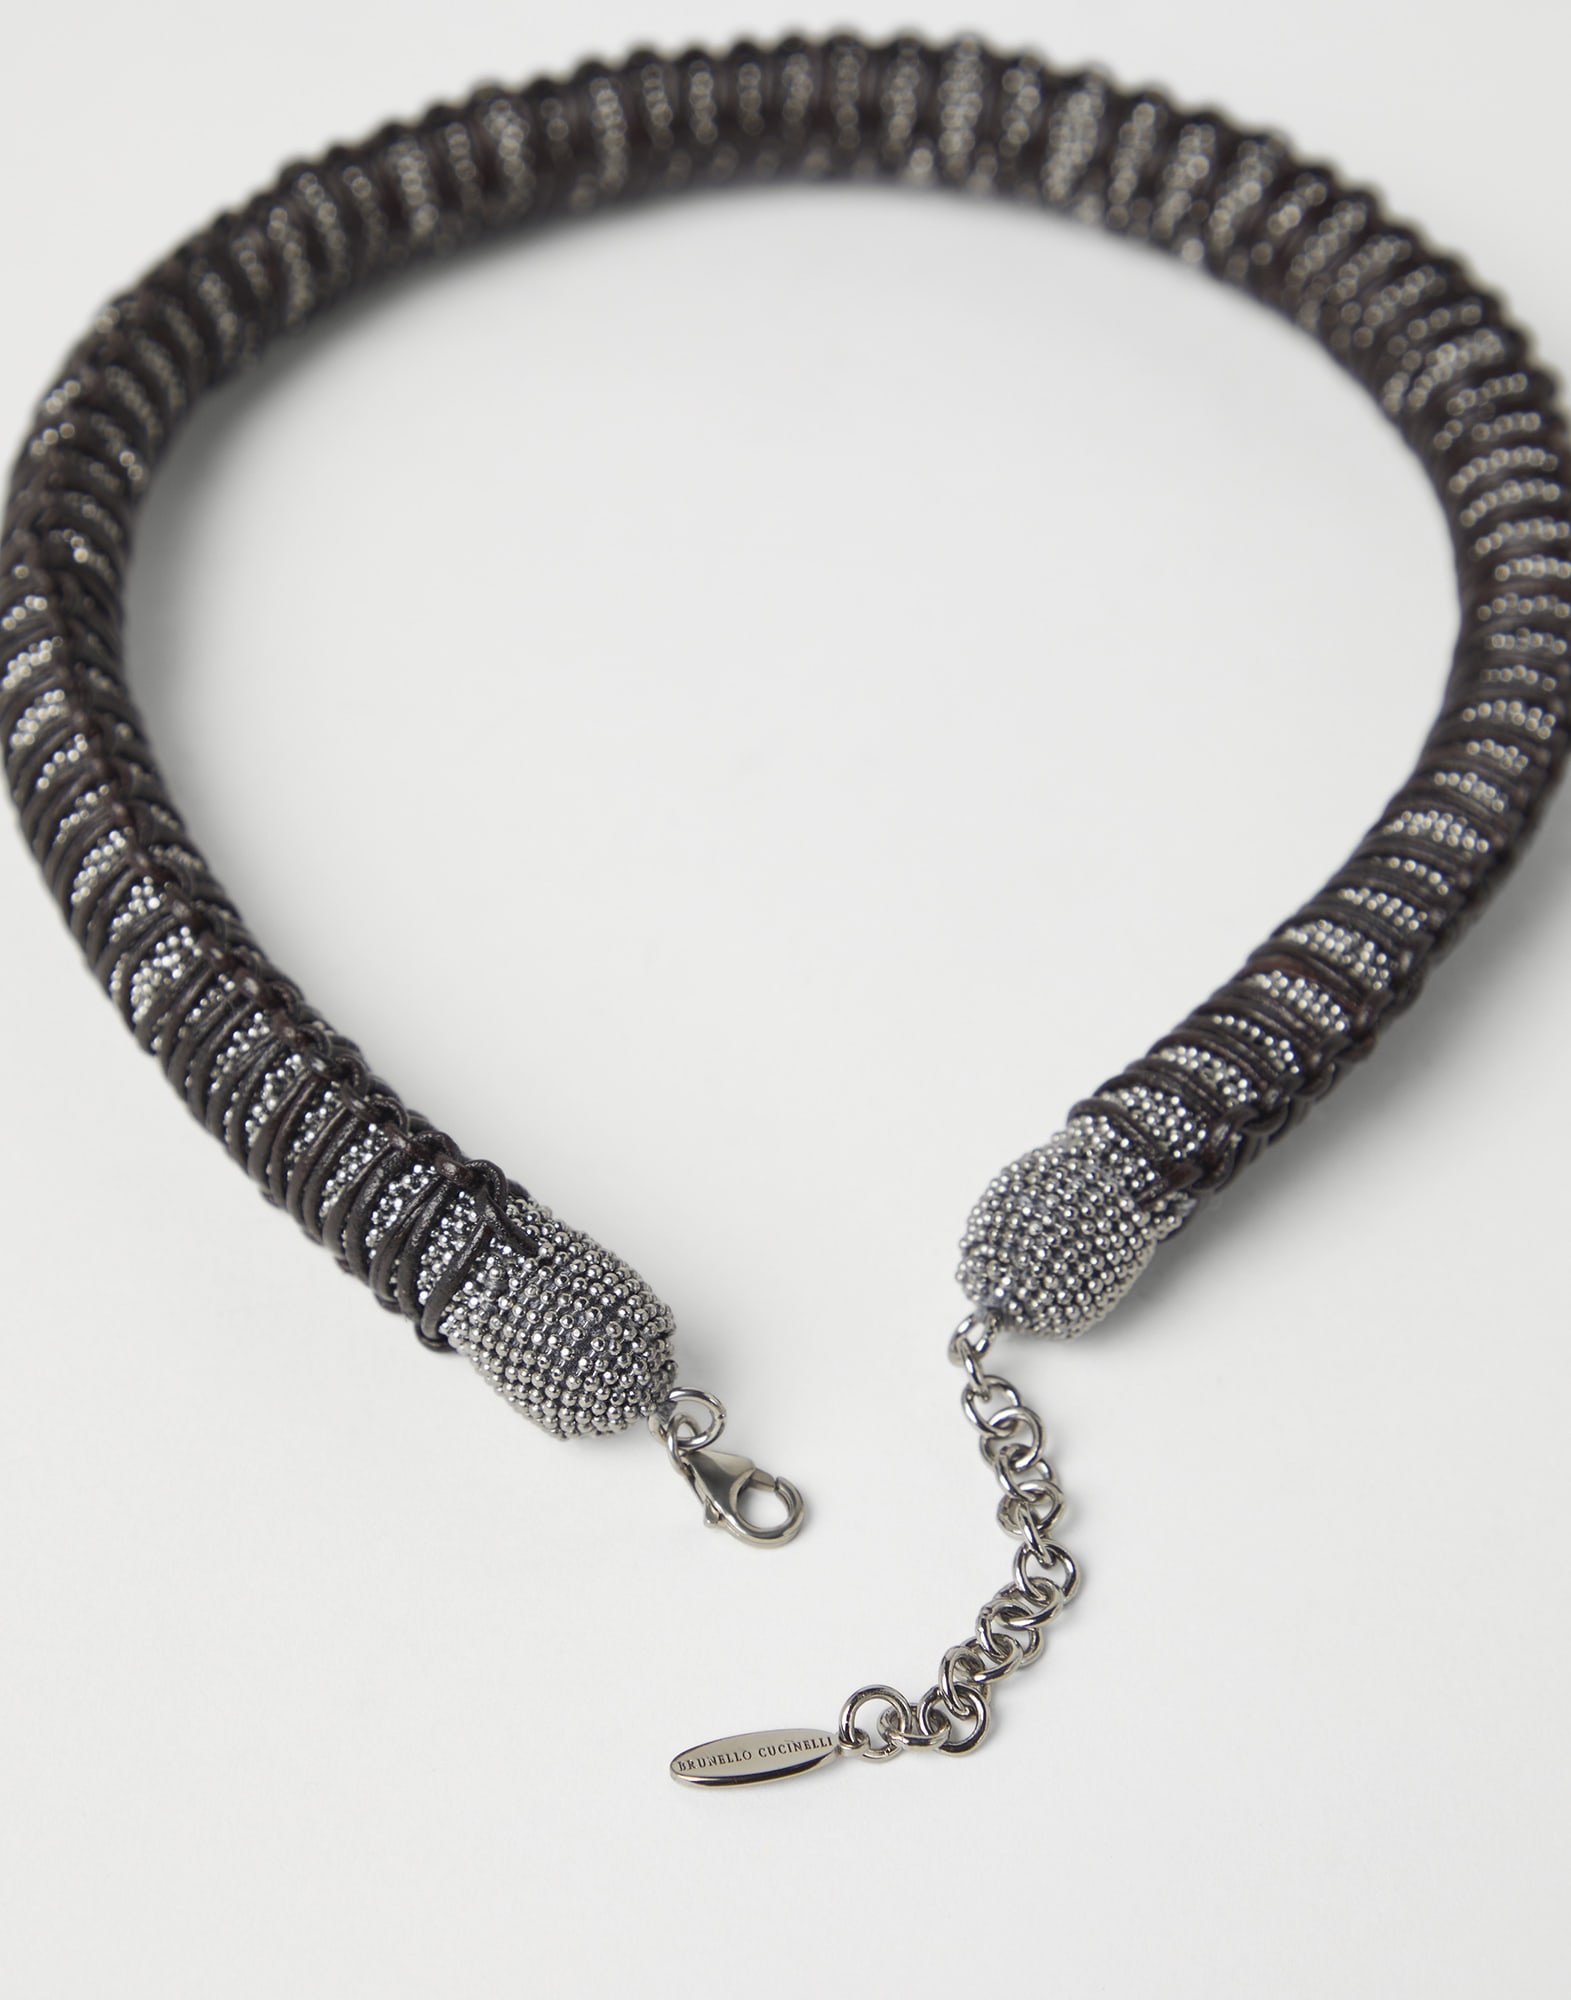 Monili and braided leather choker - 2